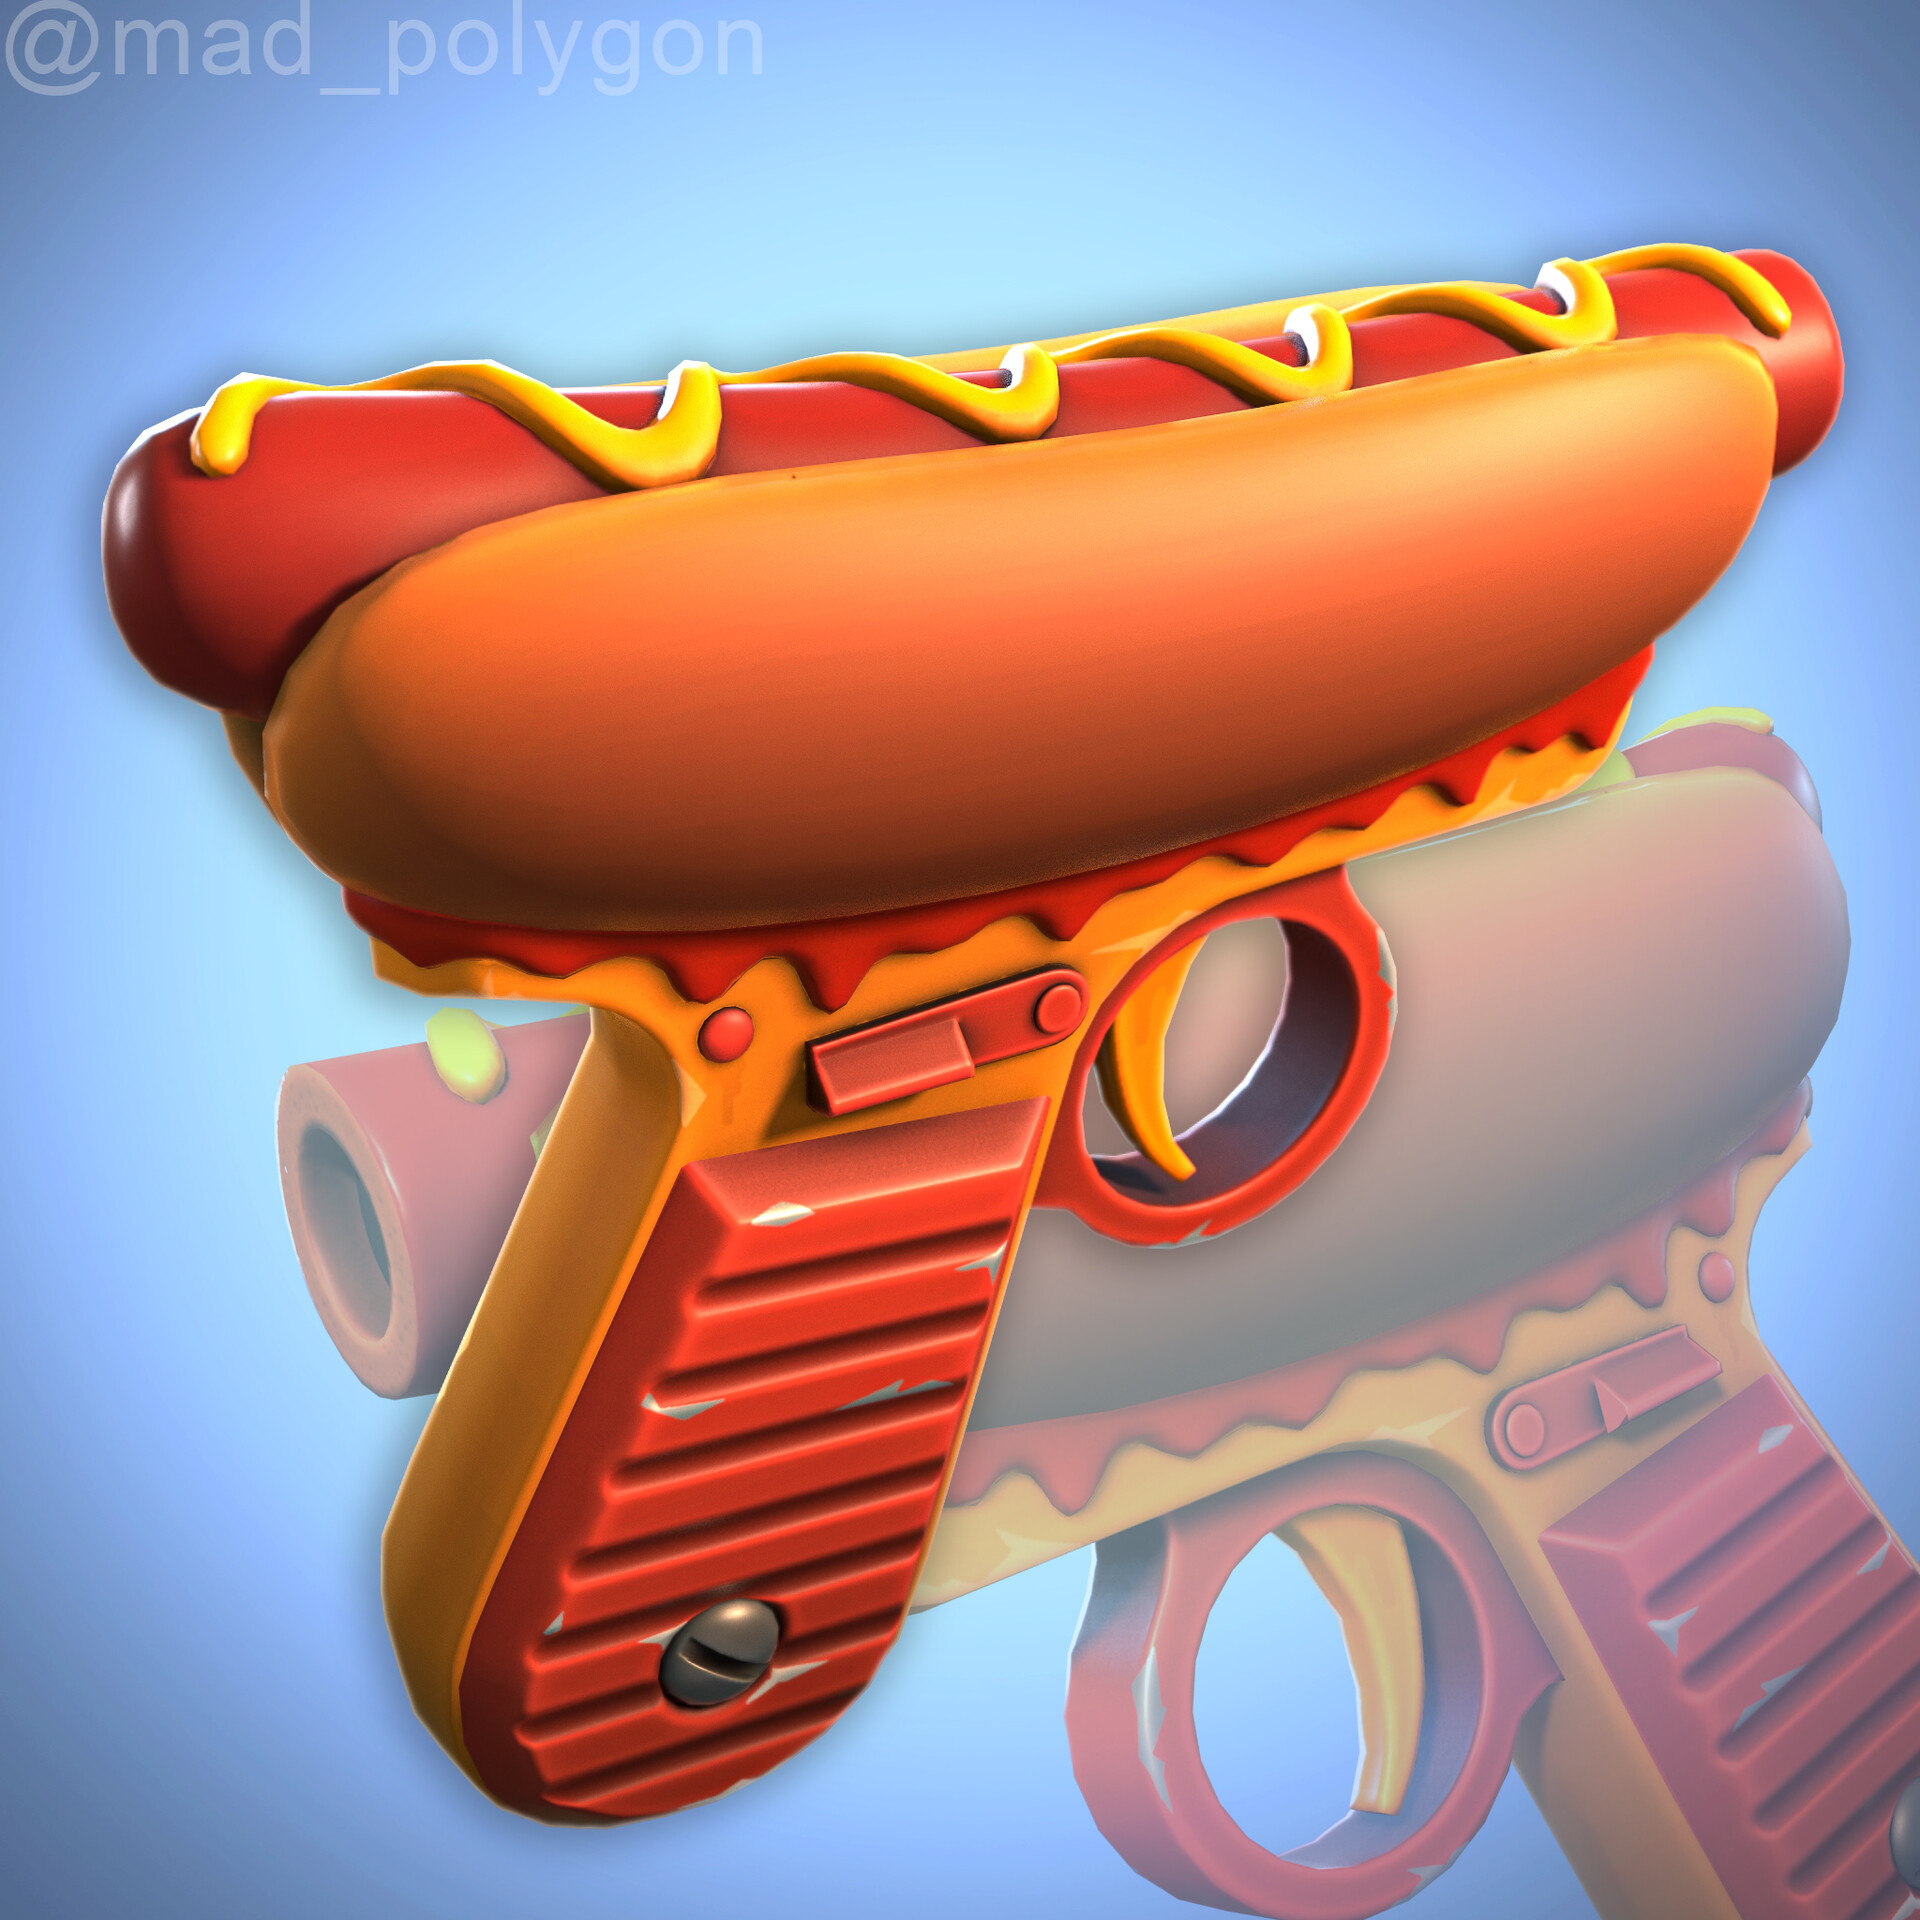 Mad Polygon - hot dog gun